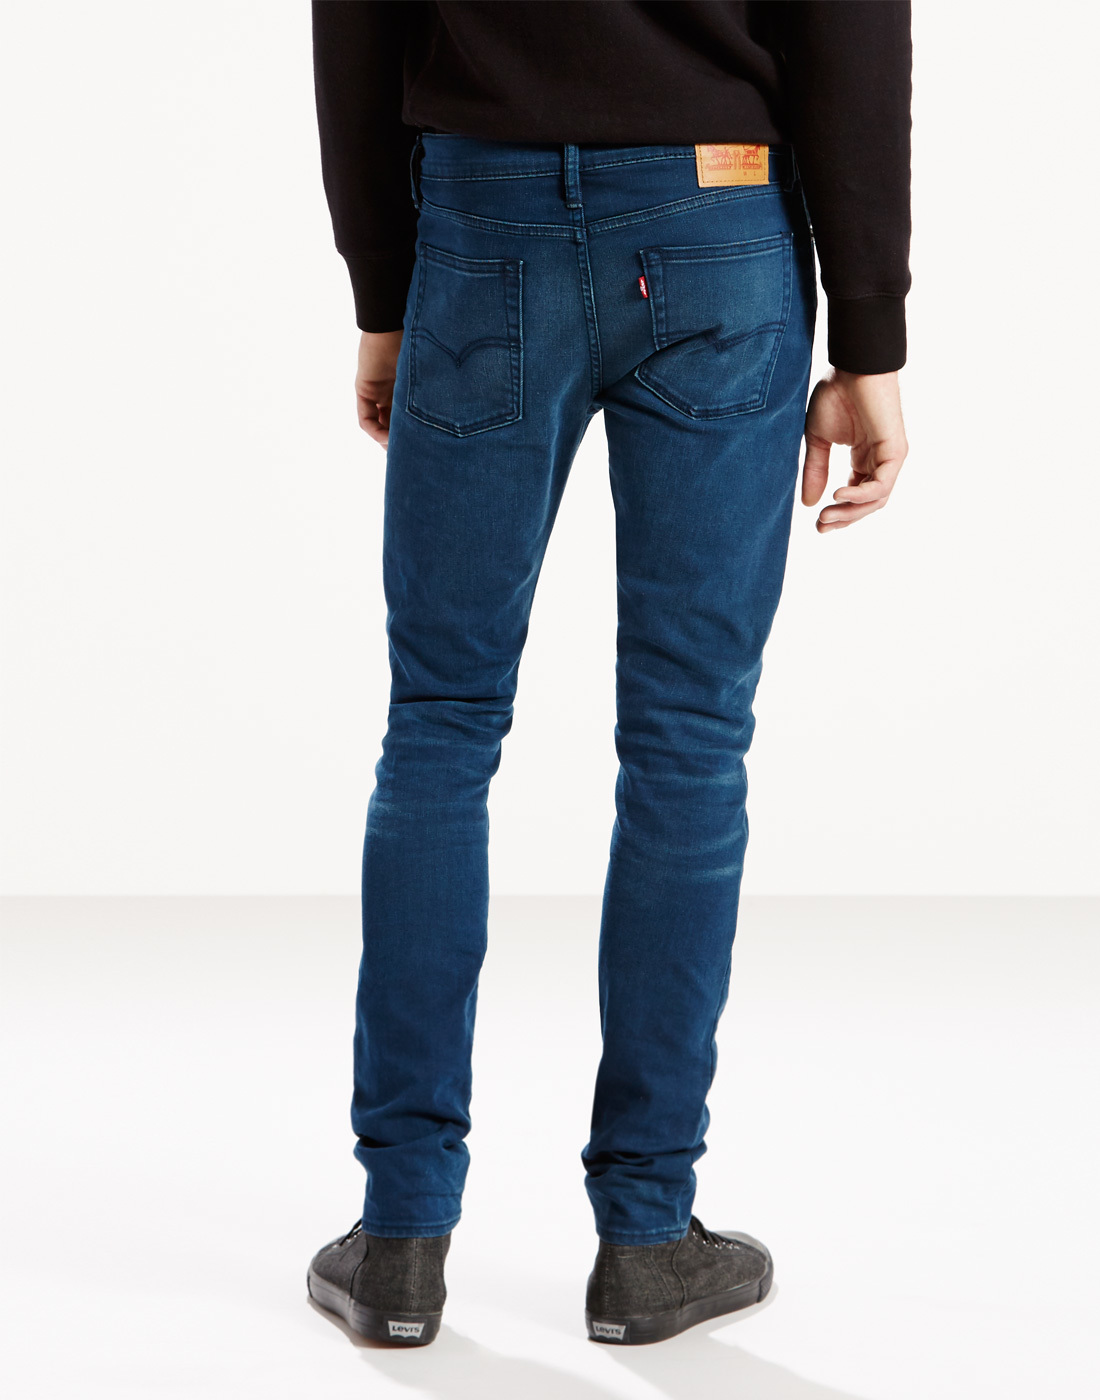 LEVI'S® 510 Retro Indie Mod Skinny Mens Denim Jeans in Red Fern